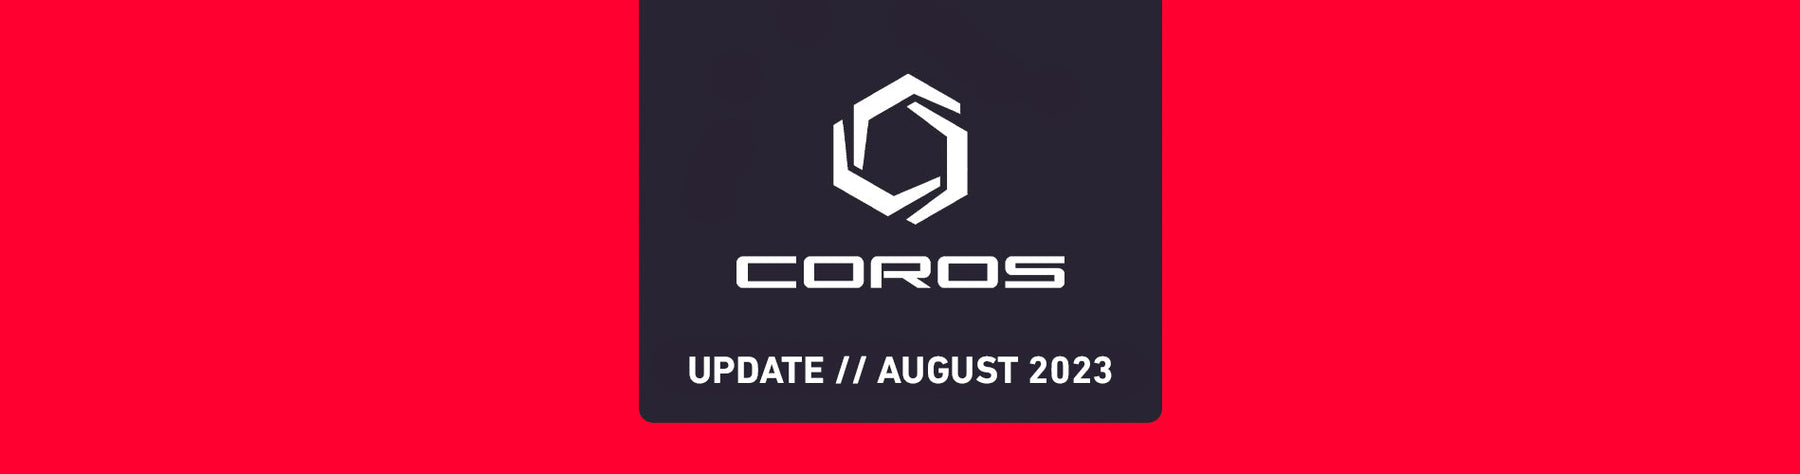 COROS UPDATE // AUGUST 2023